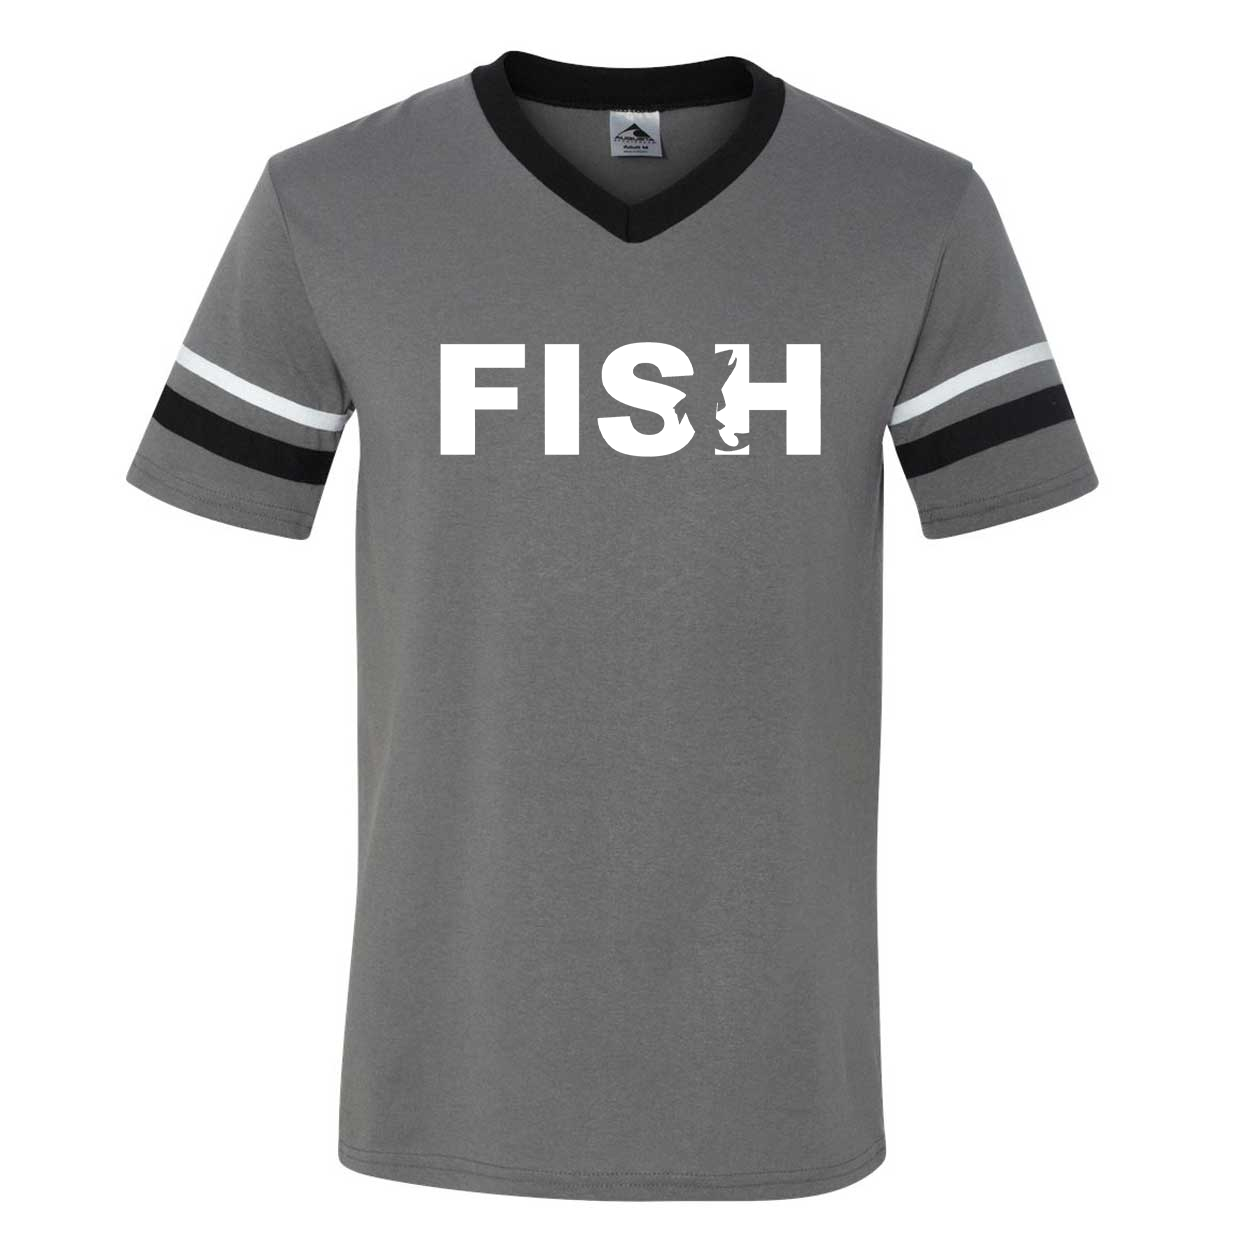 Fish Catch Logo Classic Premium Striped Jersey T-Shirt Graphite/Black/White (White Logo)